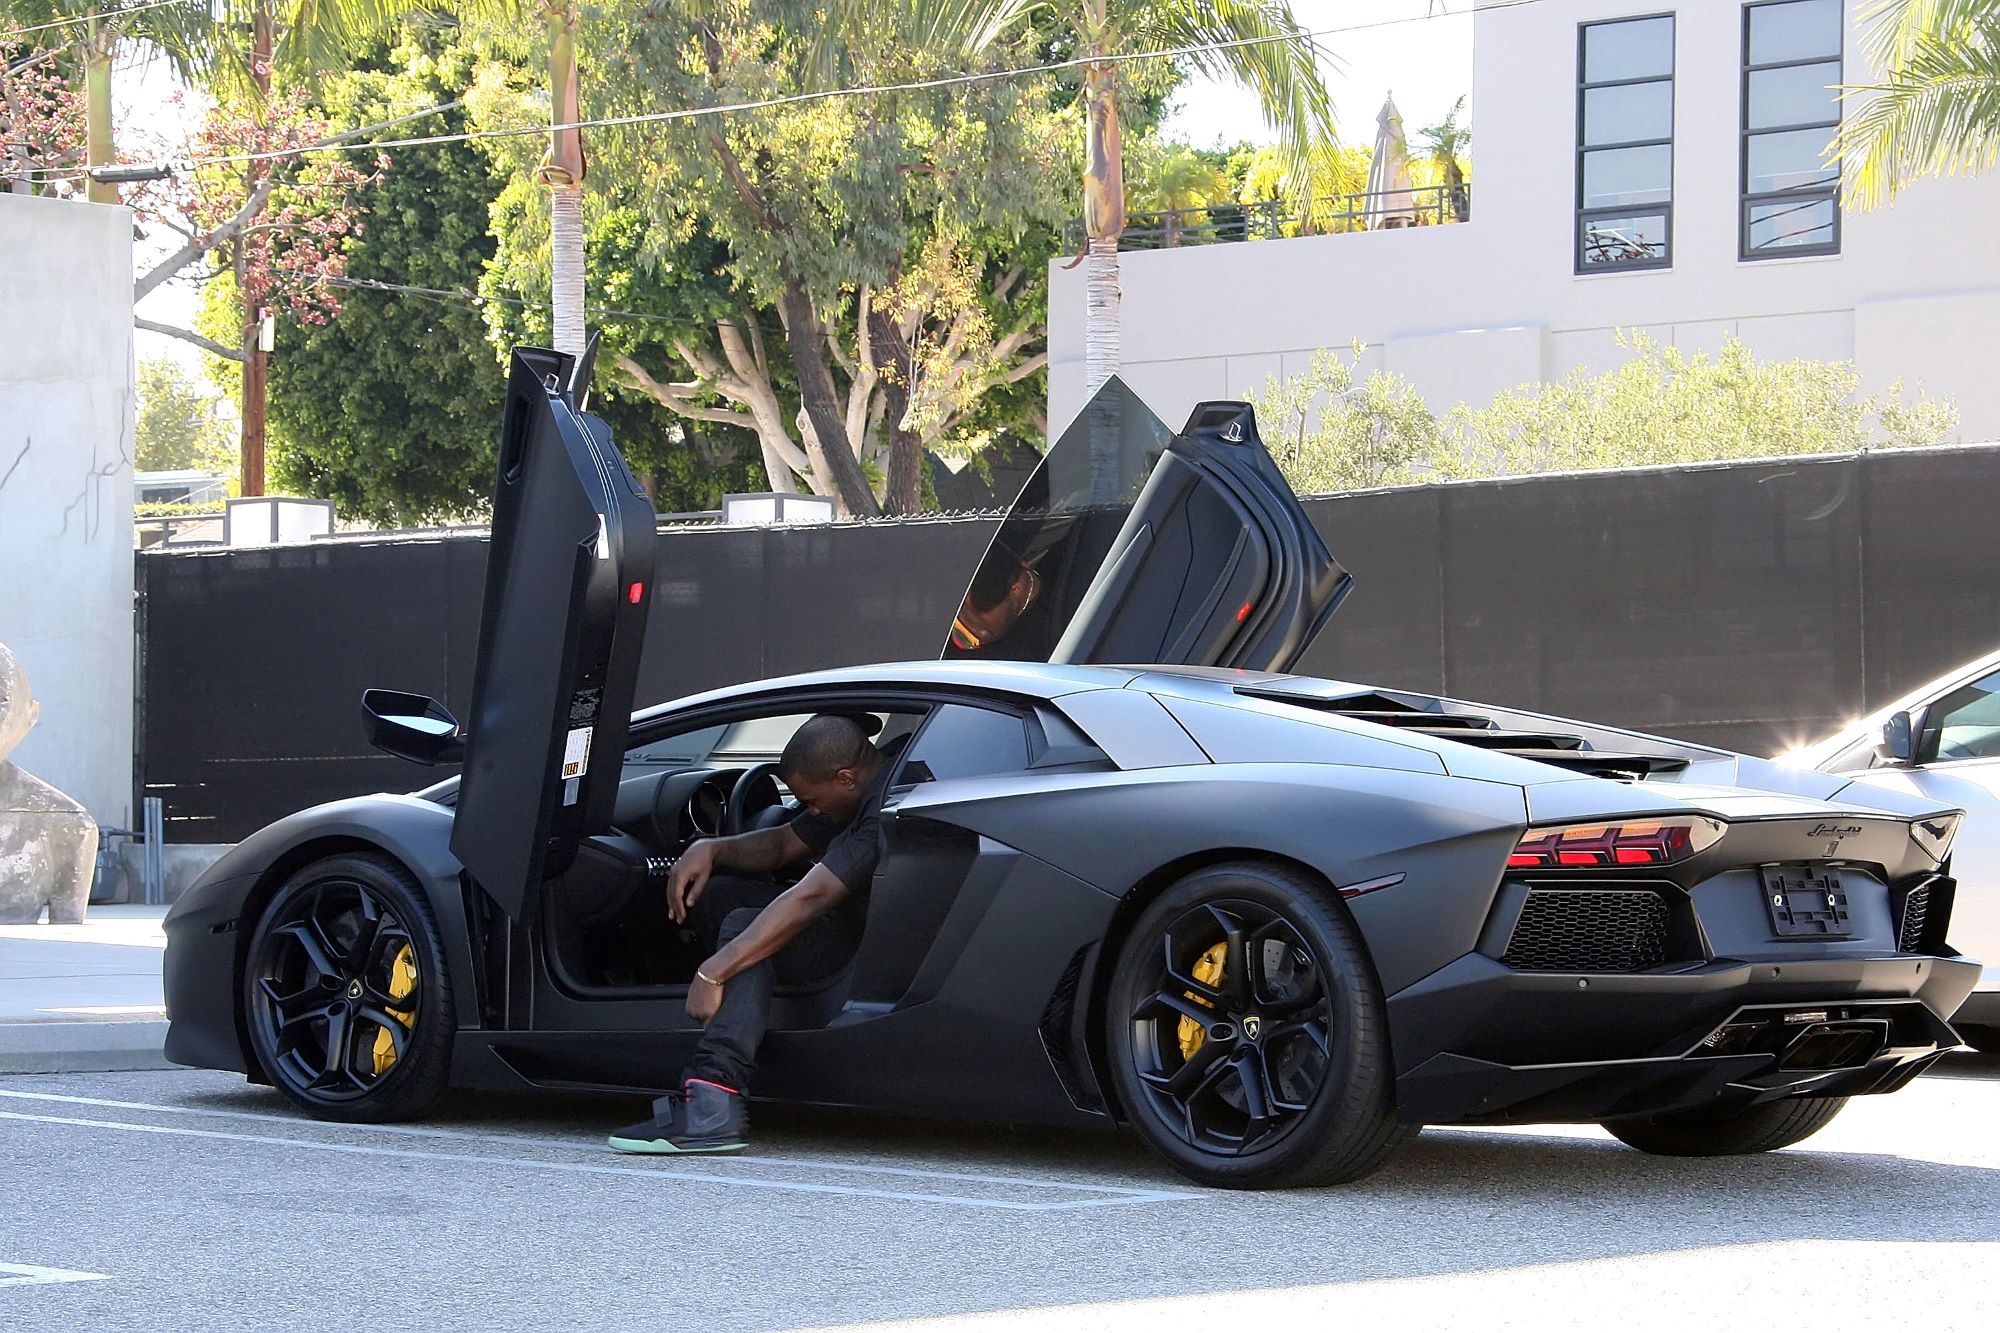 Kayne West exiting an exotic luxury car model in Los Angeles, California